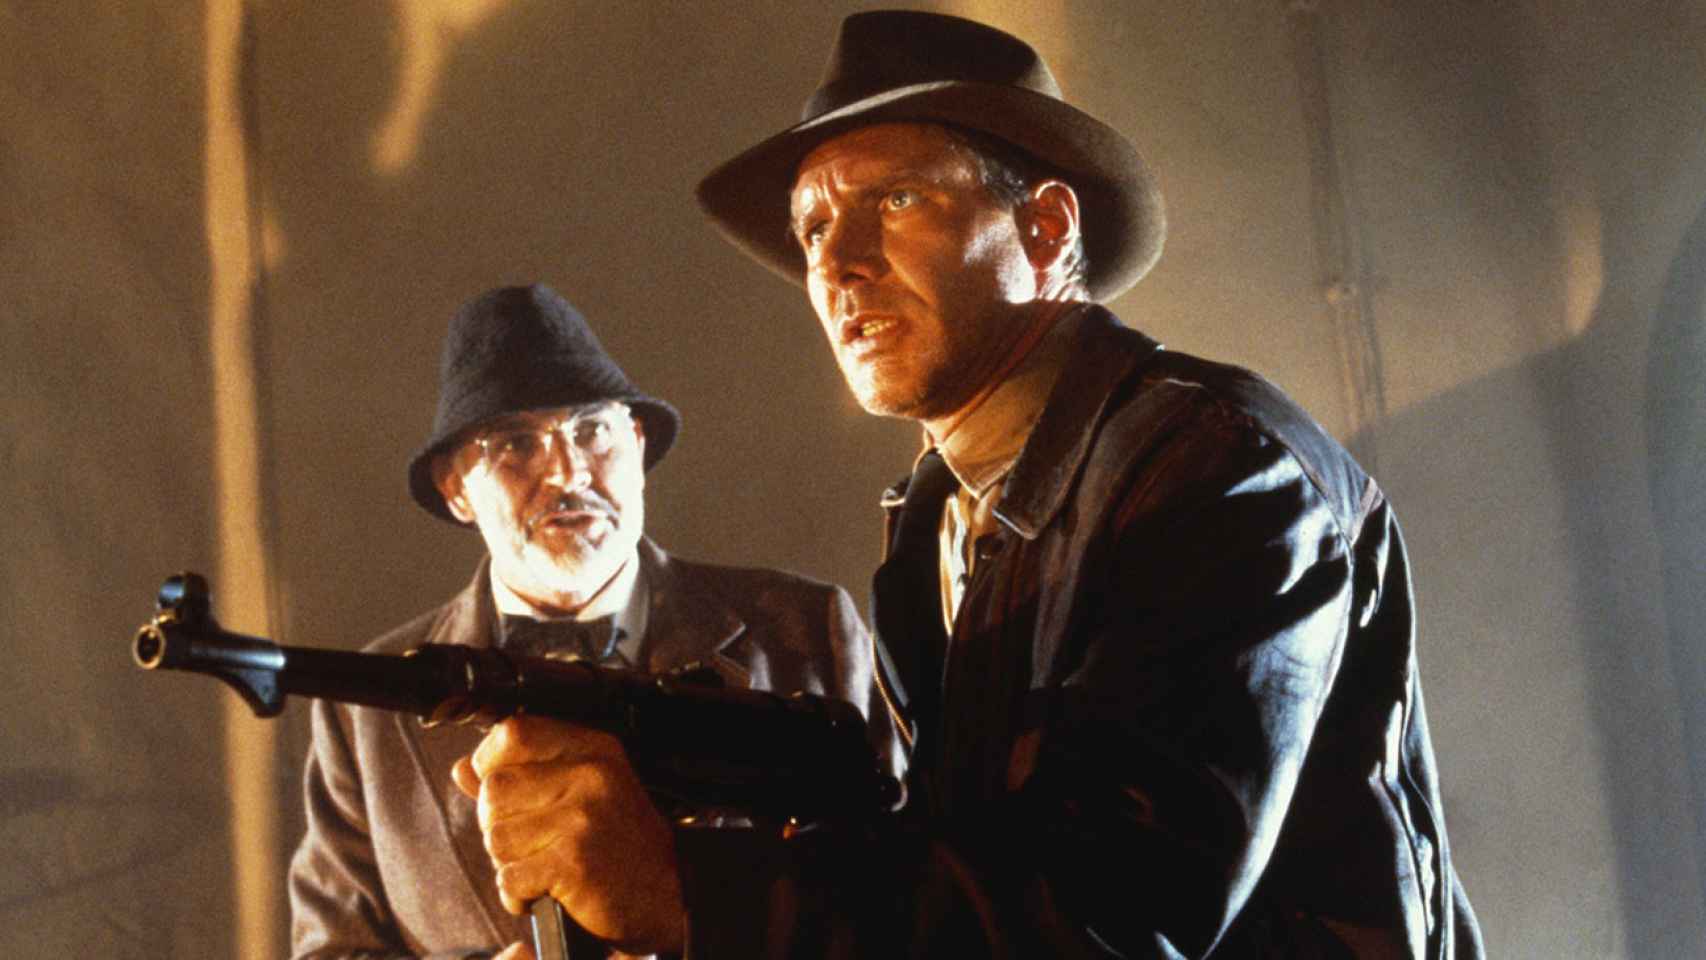 'Indiana Jones and the Last Crusade'